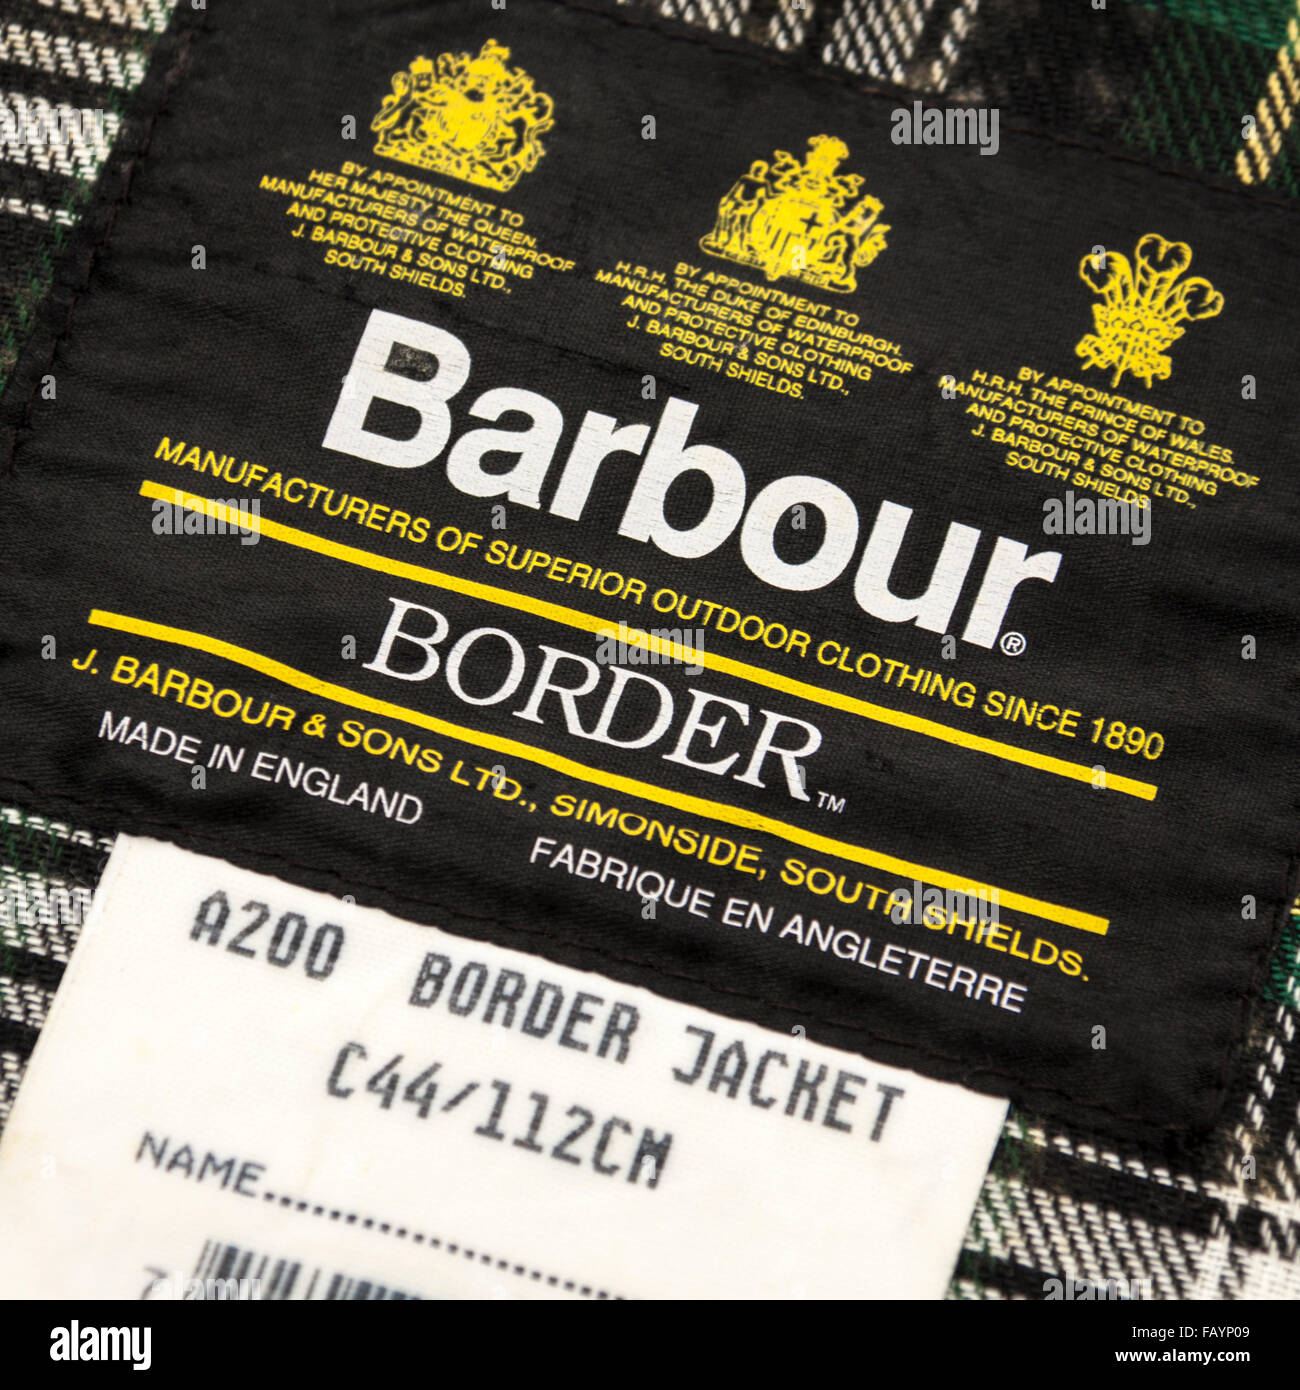 Barbour Labels | estudioespositoymiguel.com.ar